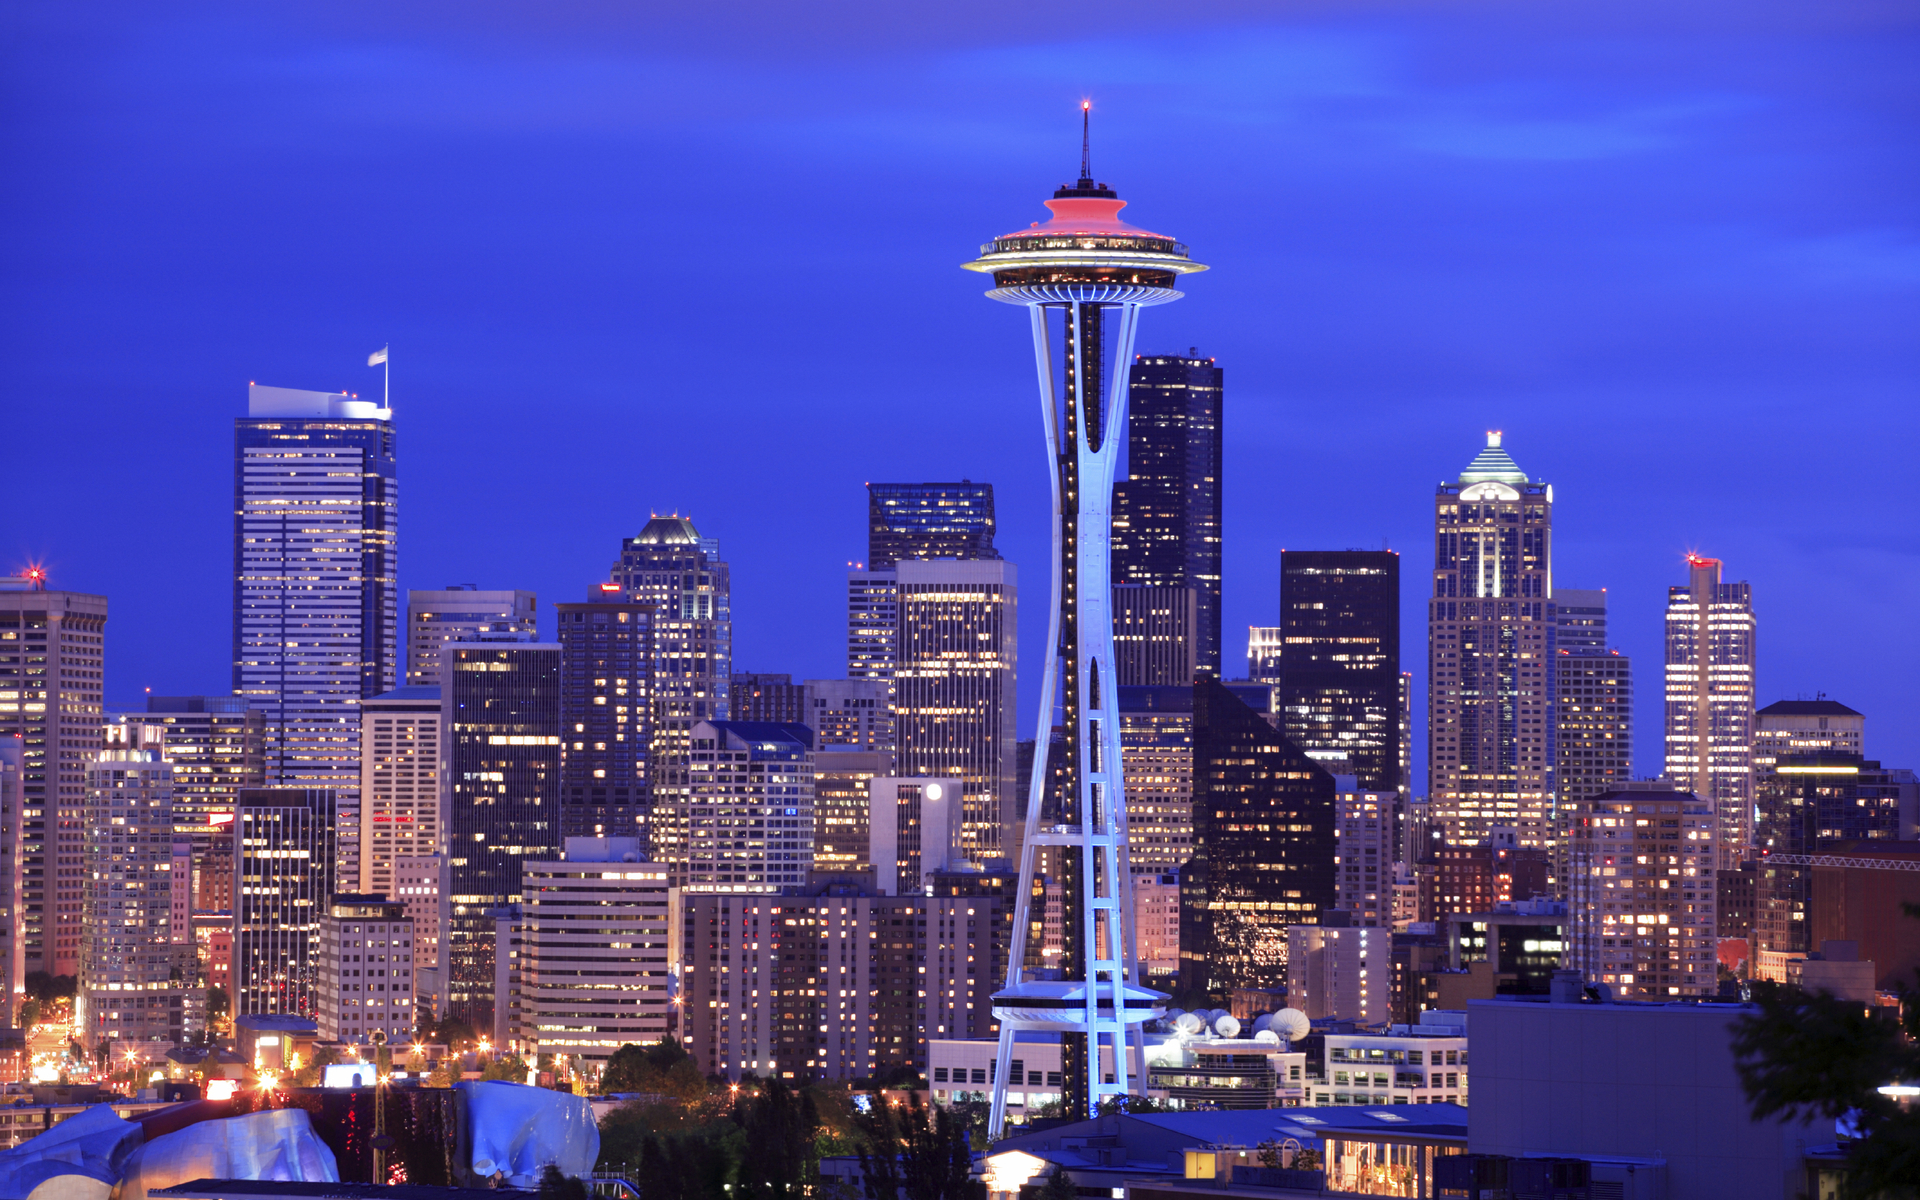 Hd Seattle Skyline Wallpapers Wallpapersafari